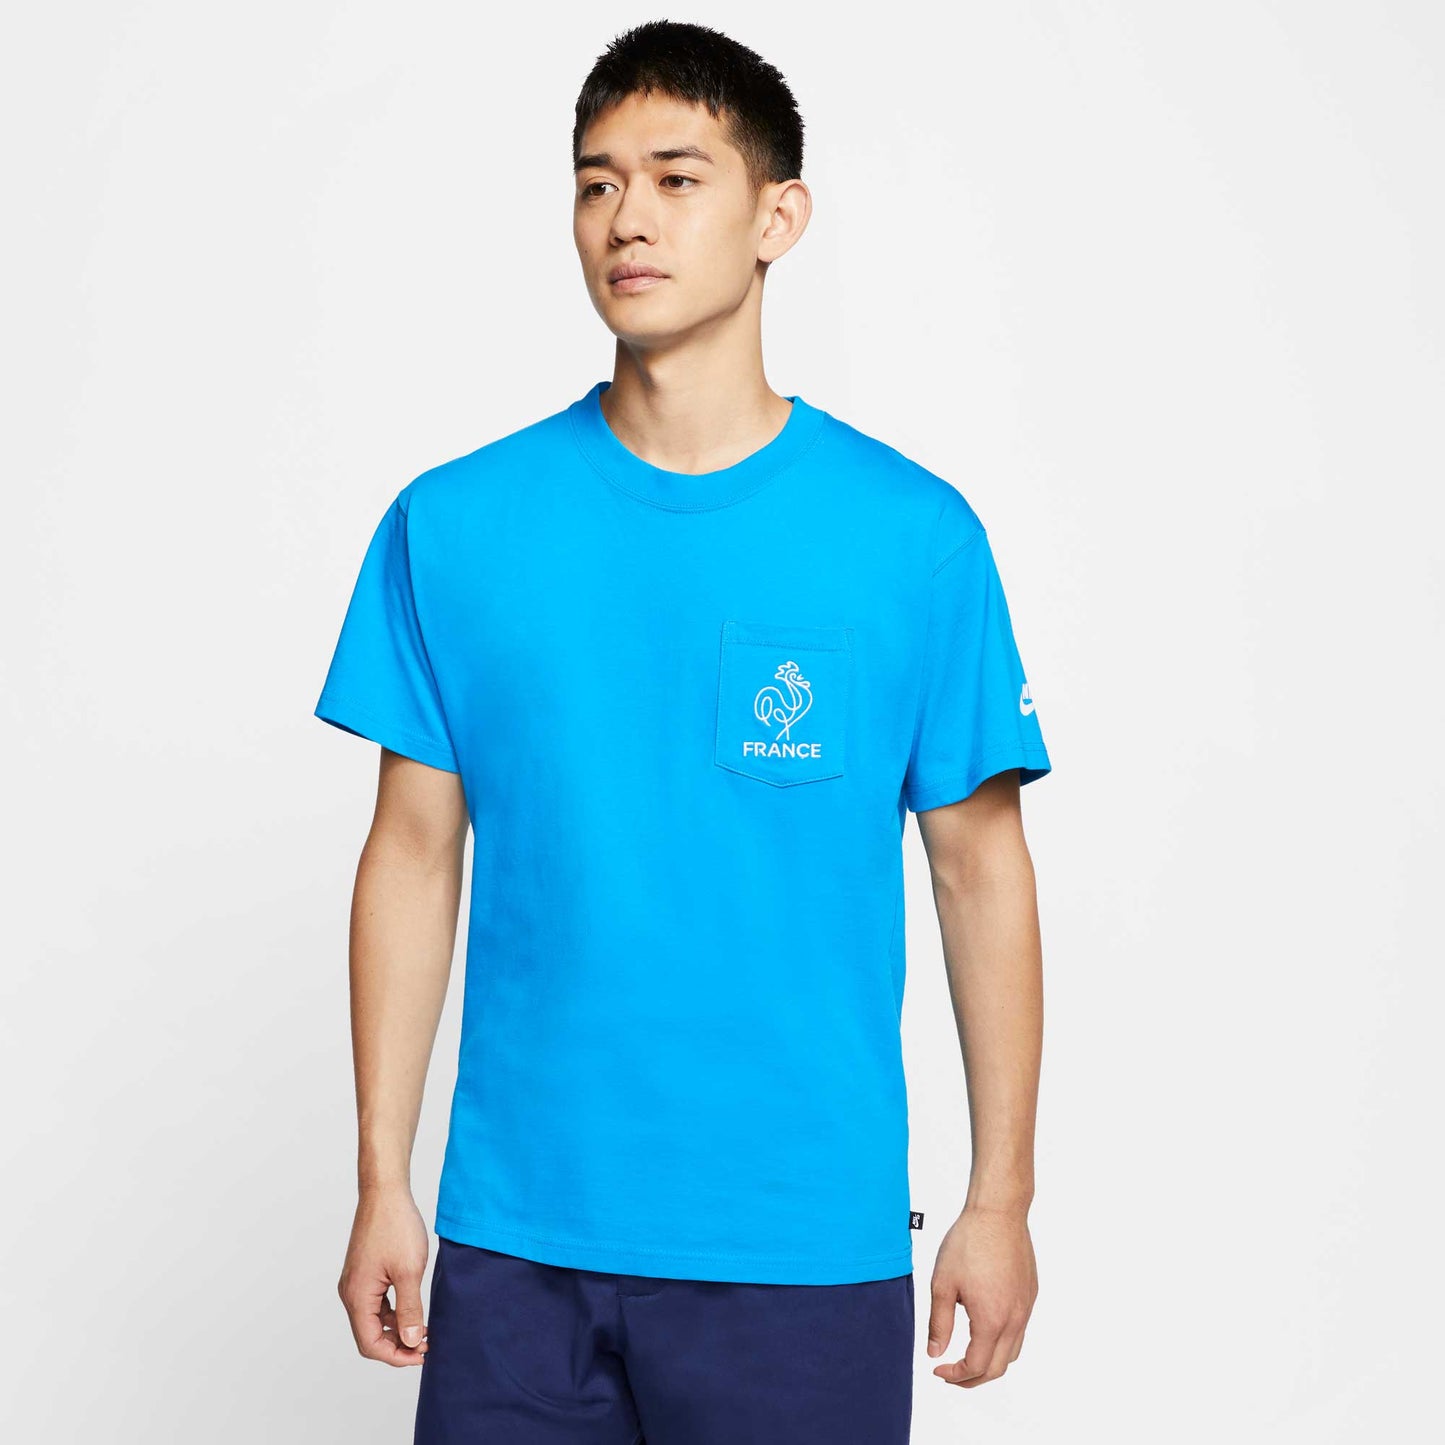 Nike SB x Parra 'France Federation Kit' t-shirt, neptune blue/white - Tiki Room Skateboards - 1